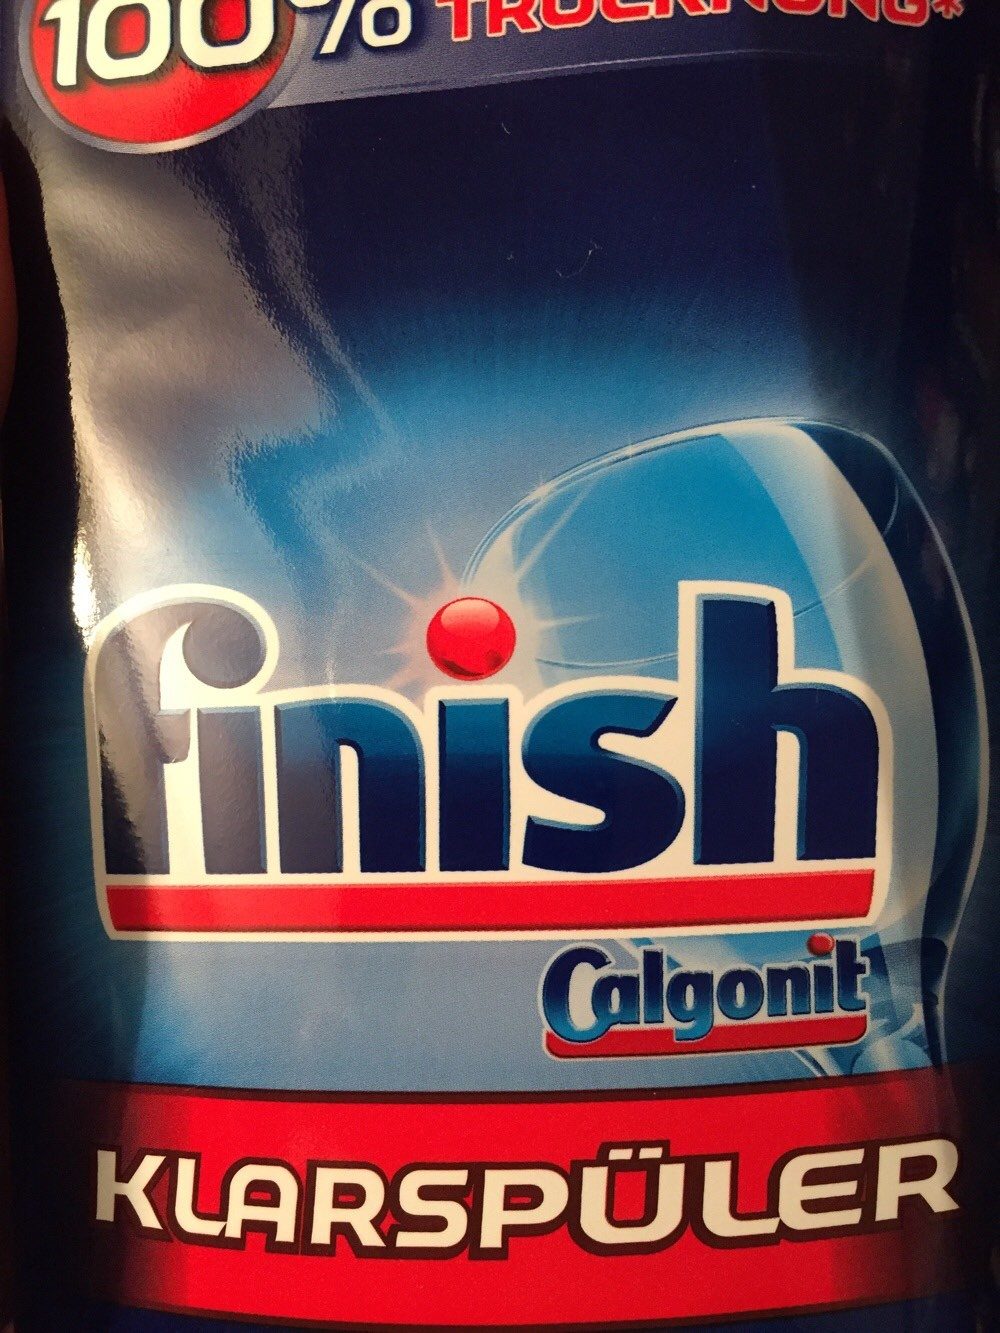 finish Klarspüler - Product - de